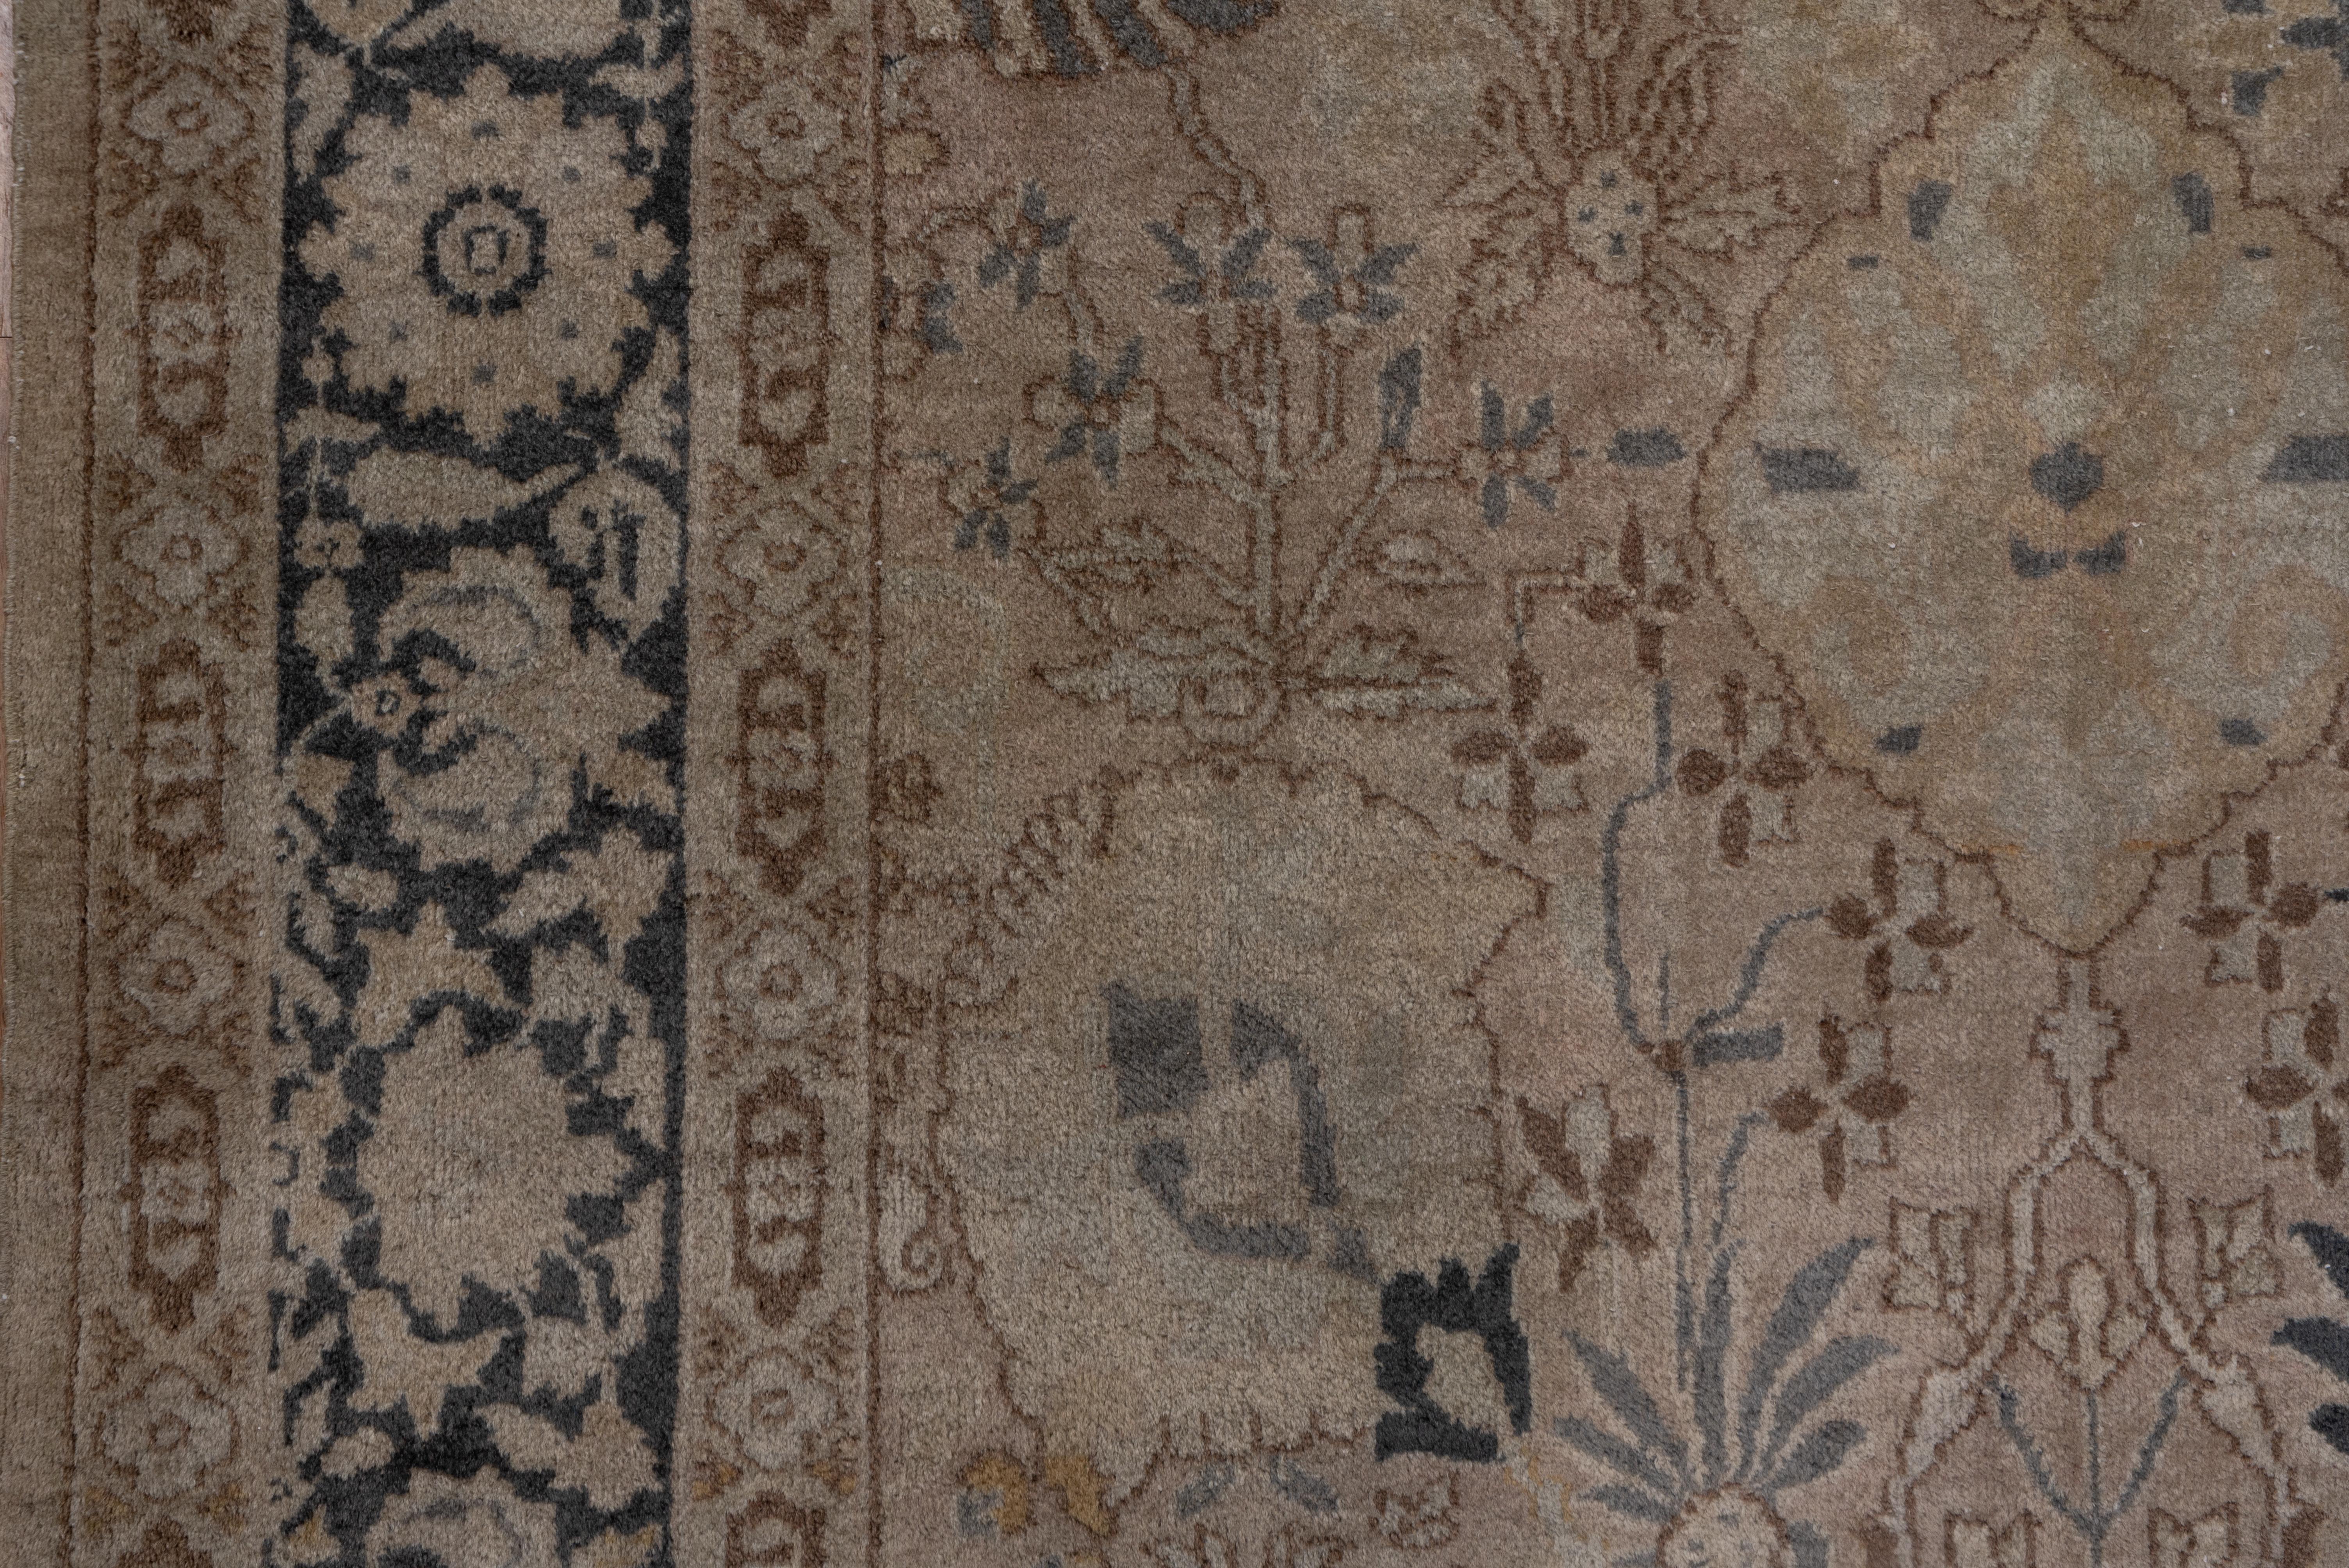 Mid-20th Century Attractive Indian Laristan Gallery Carpet, Grey Tones, Neutral Palette